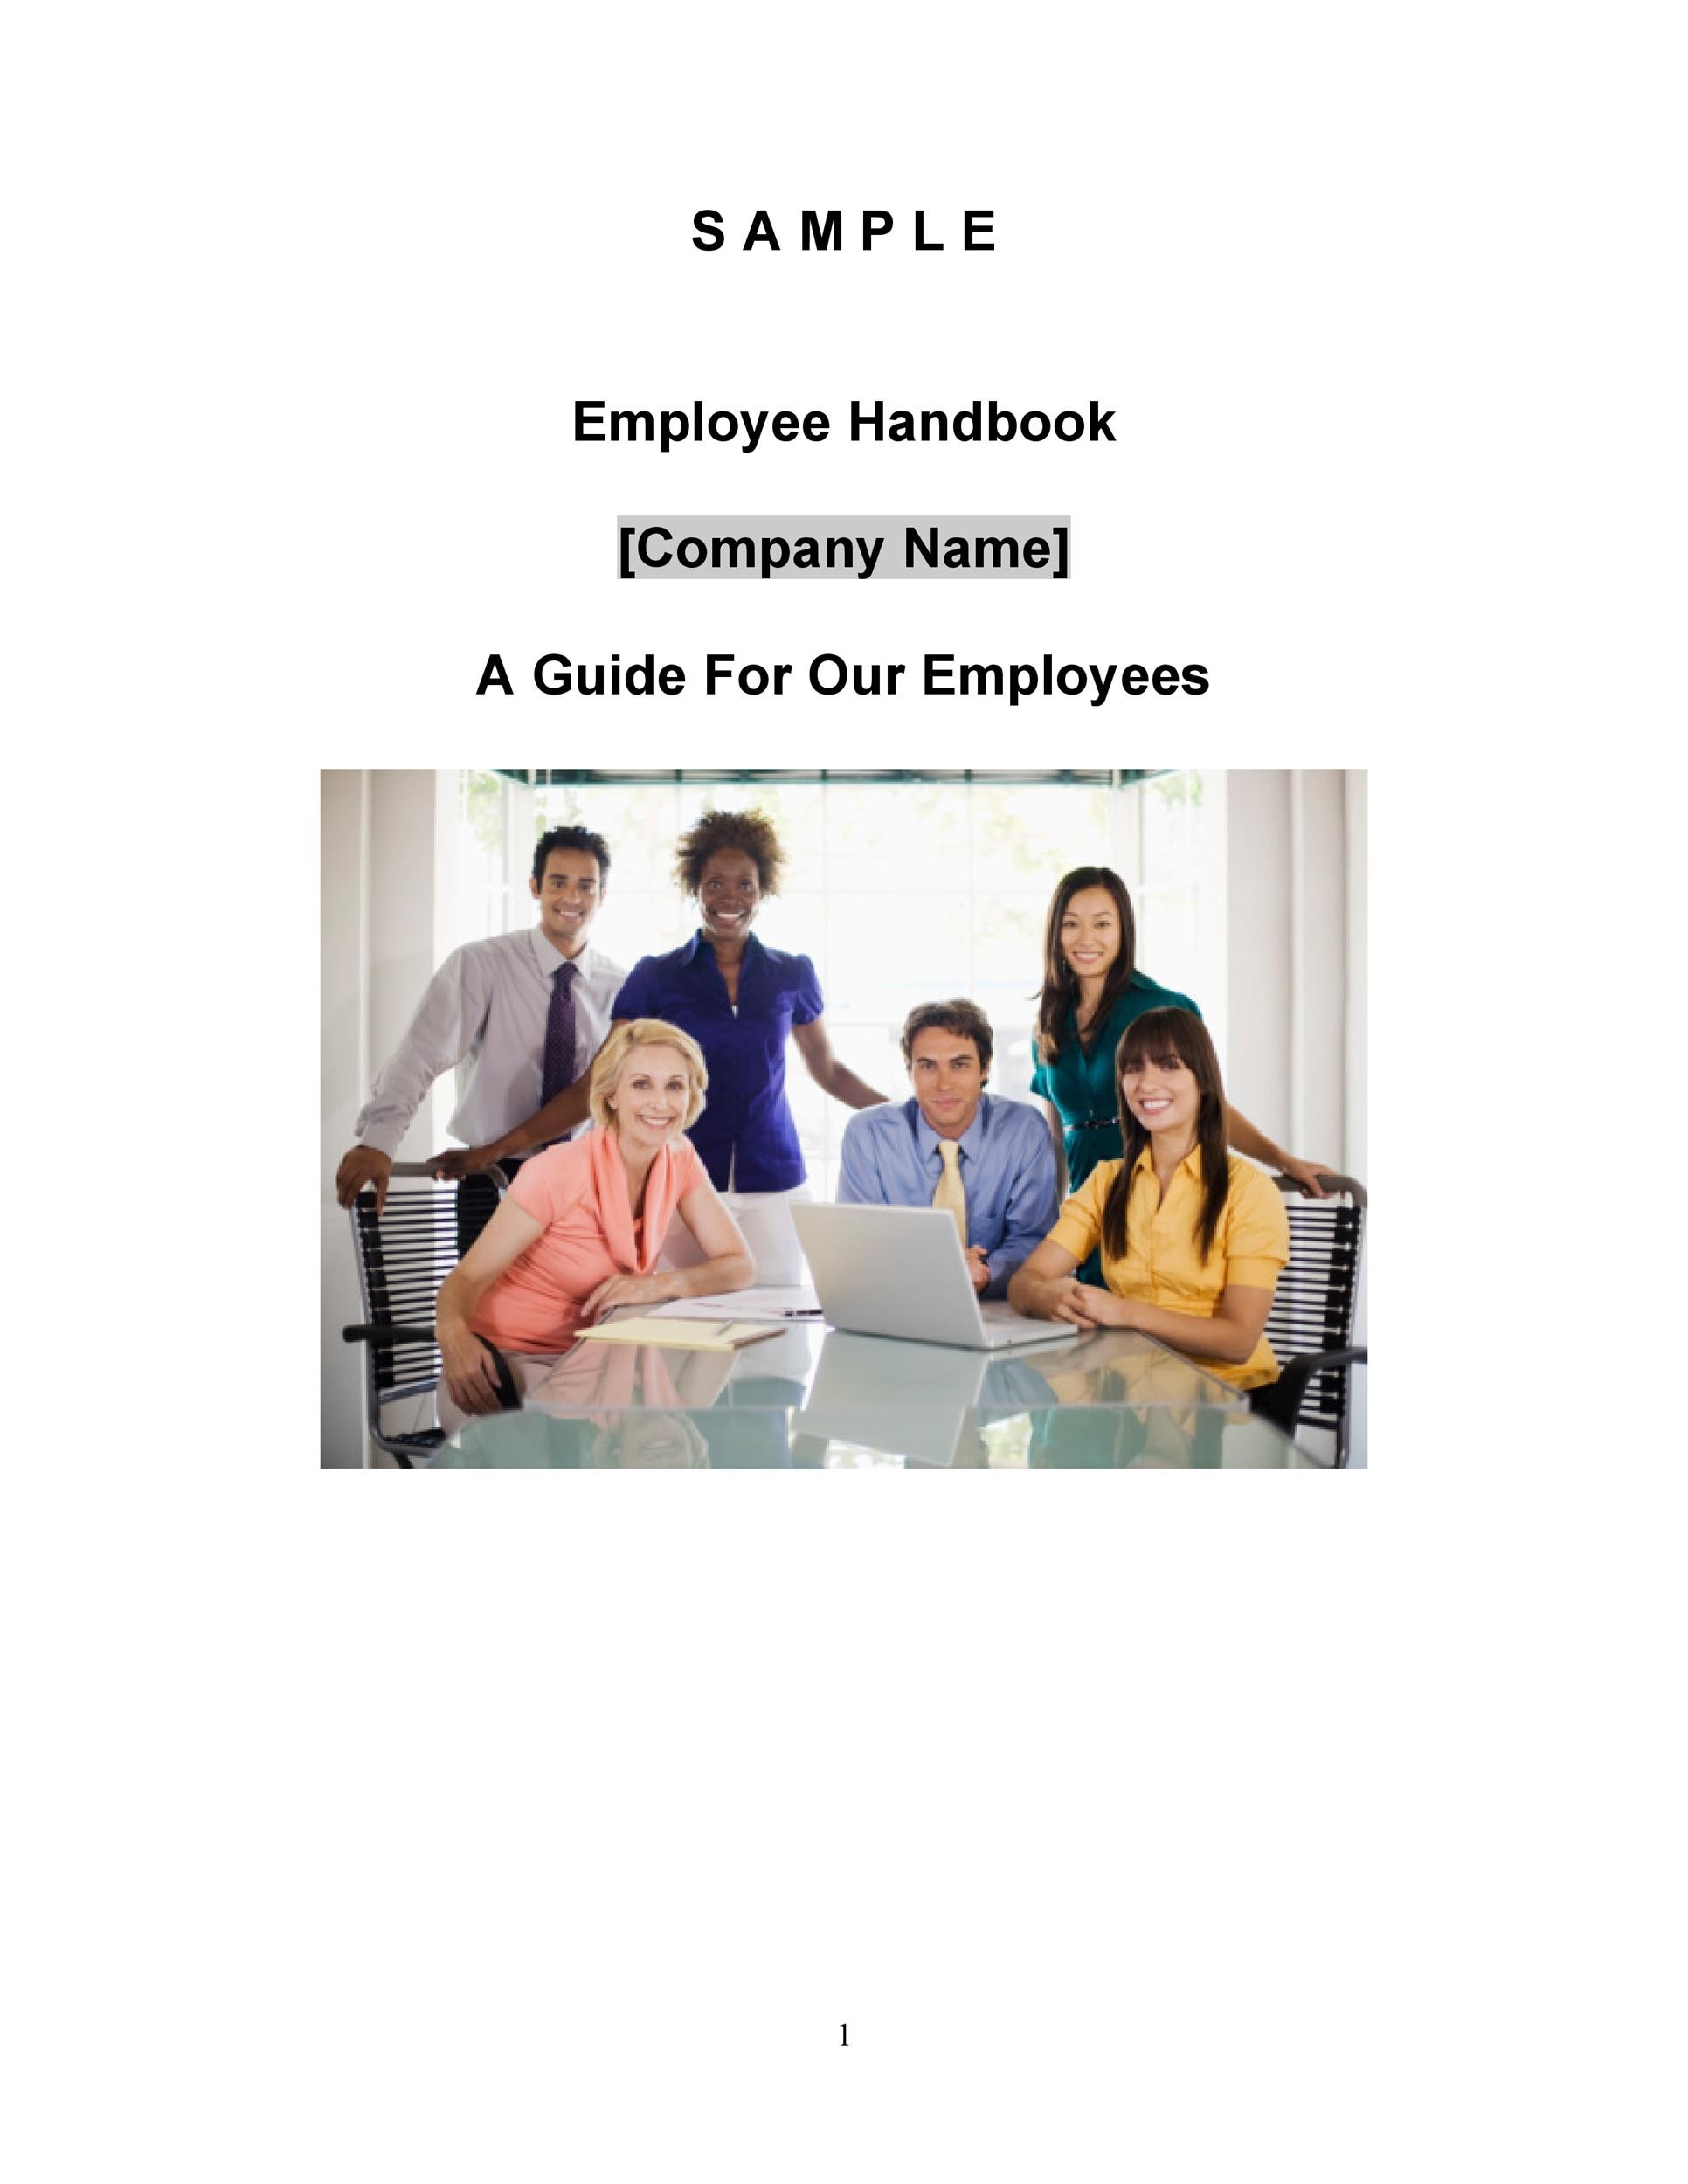 42 Best Employee Handbook Templates & Examples ᐅ TemplateLab